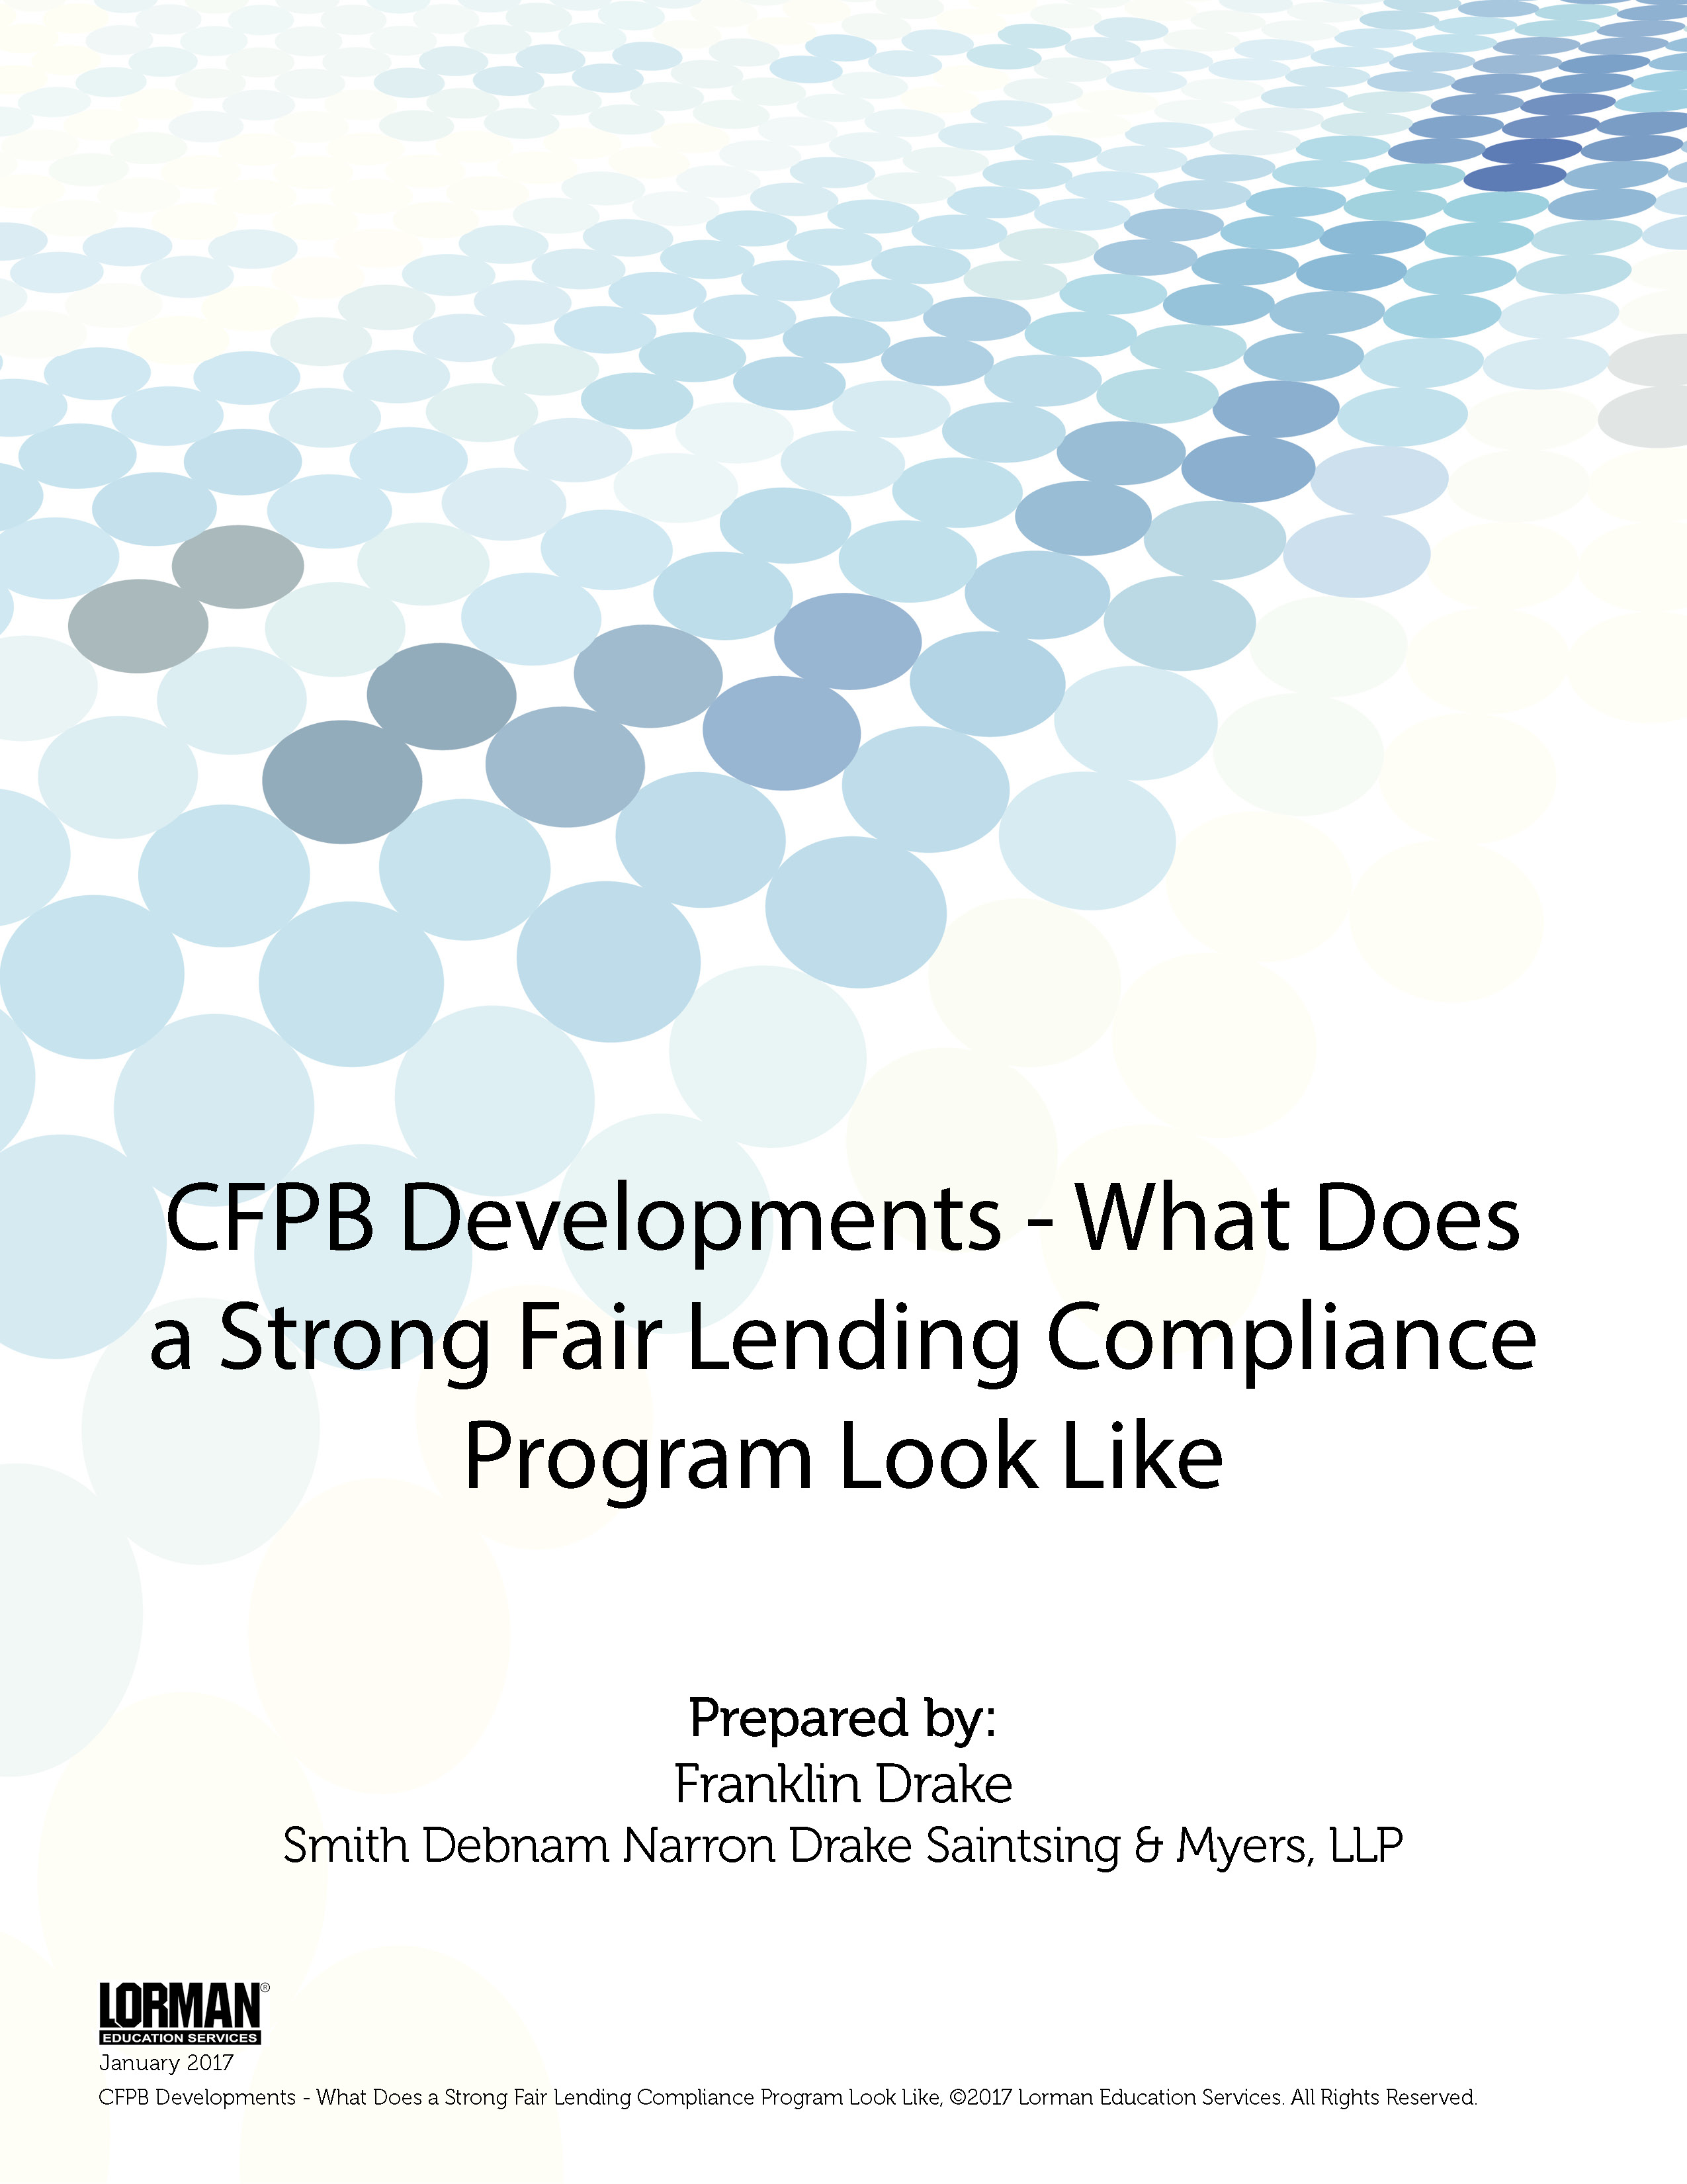 CFPB Developments - What Does a Strong Fair Lending Compliance Program Look Like